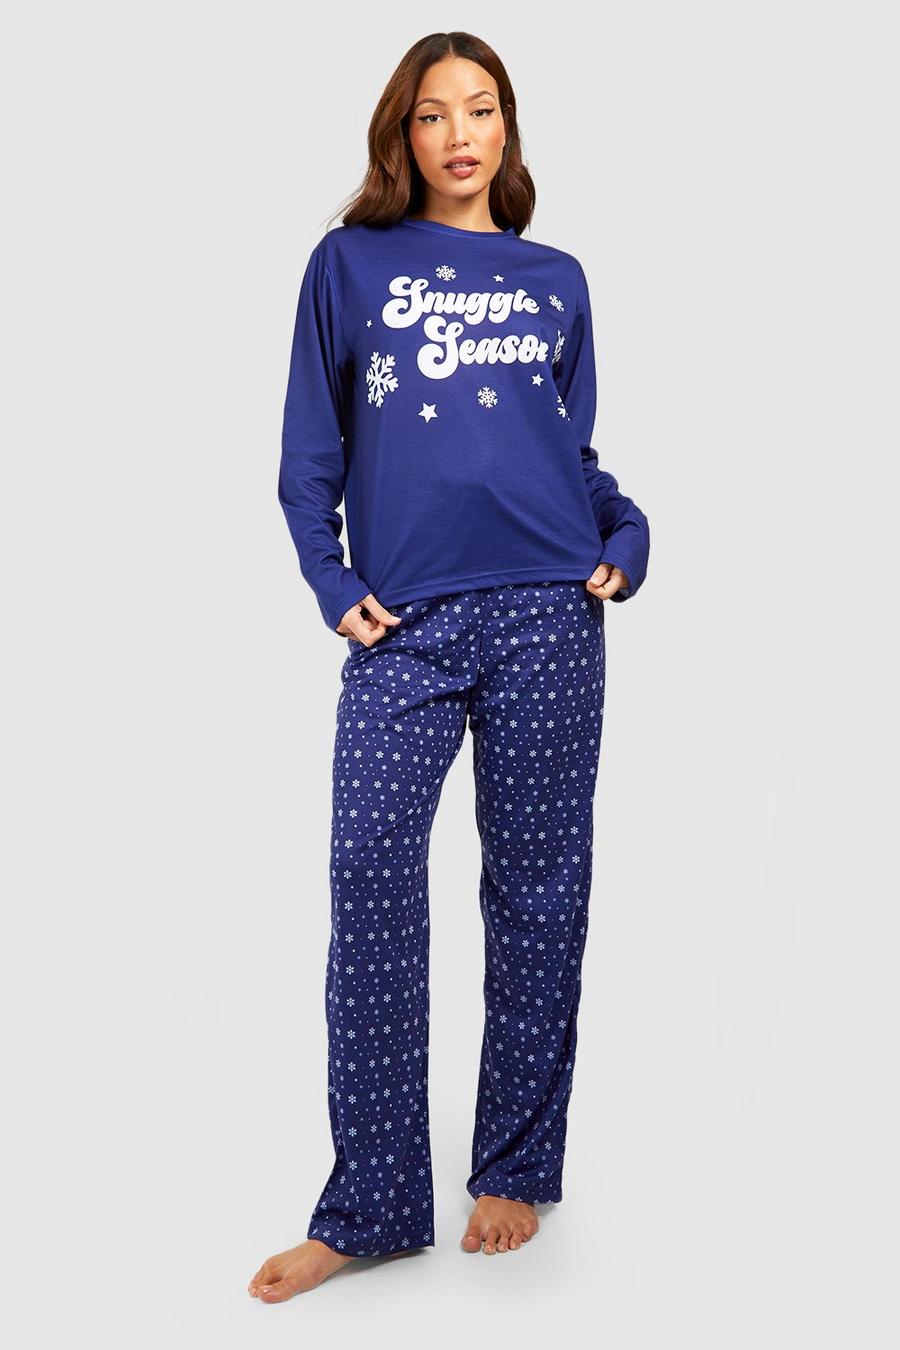 Blue Tall Snuggle Season Pajama Set